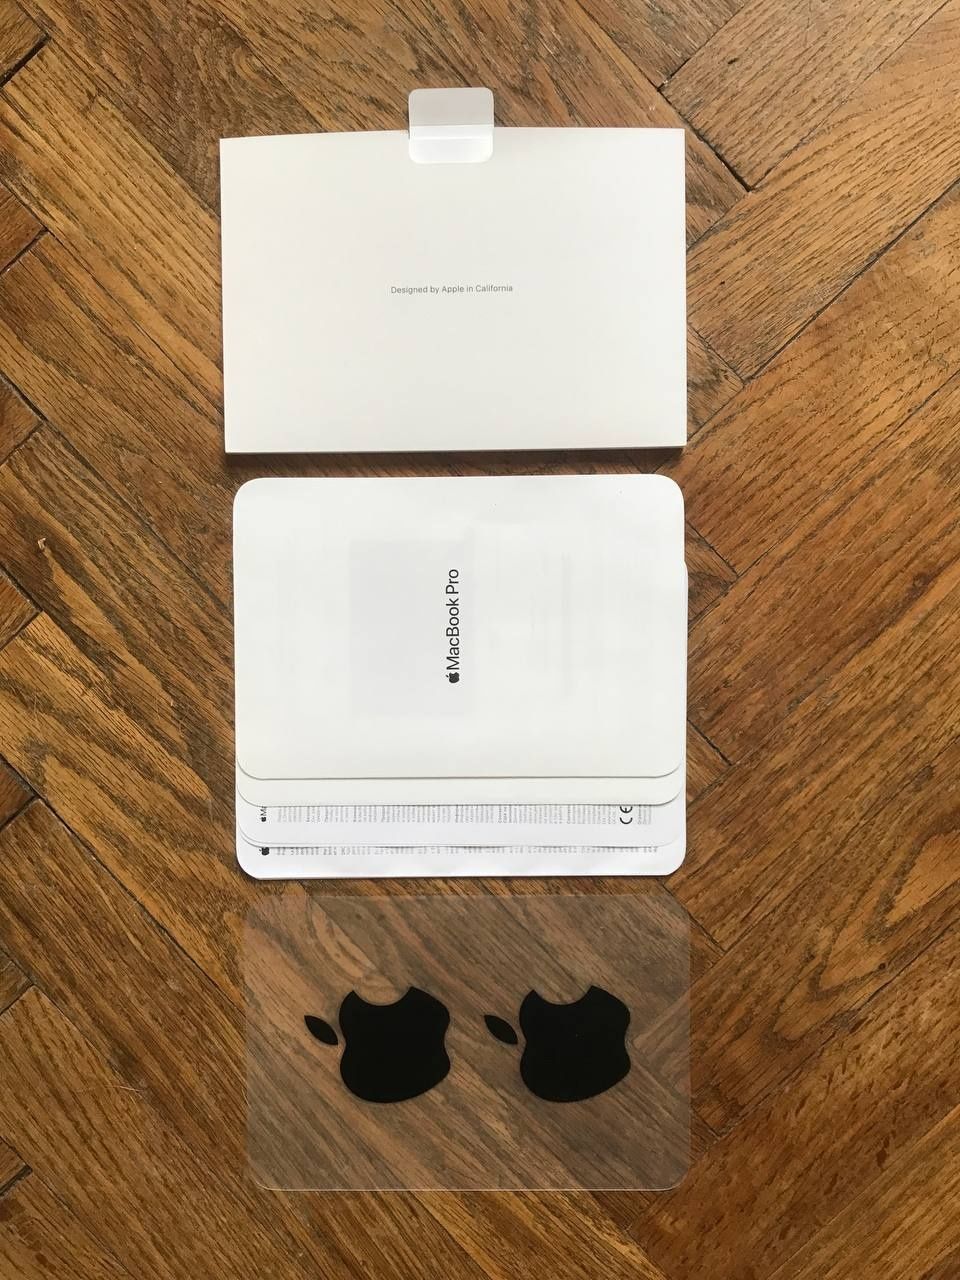 Original Box for 16-inch MacBook Pro